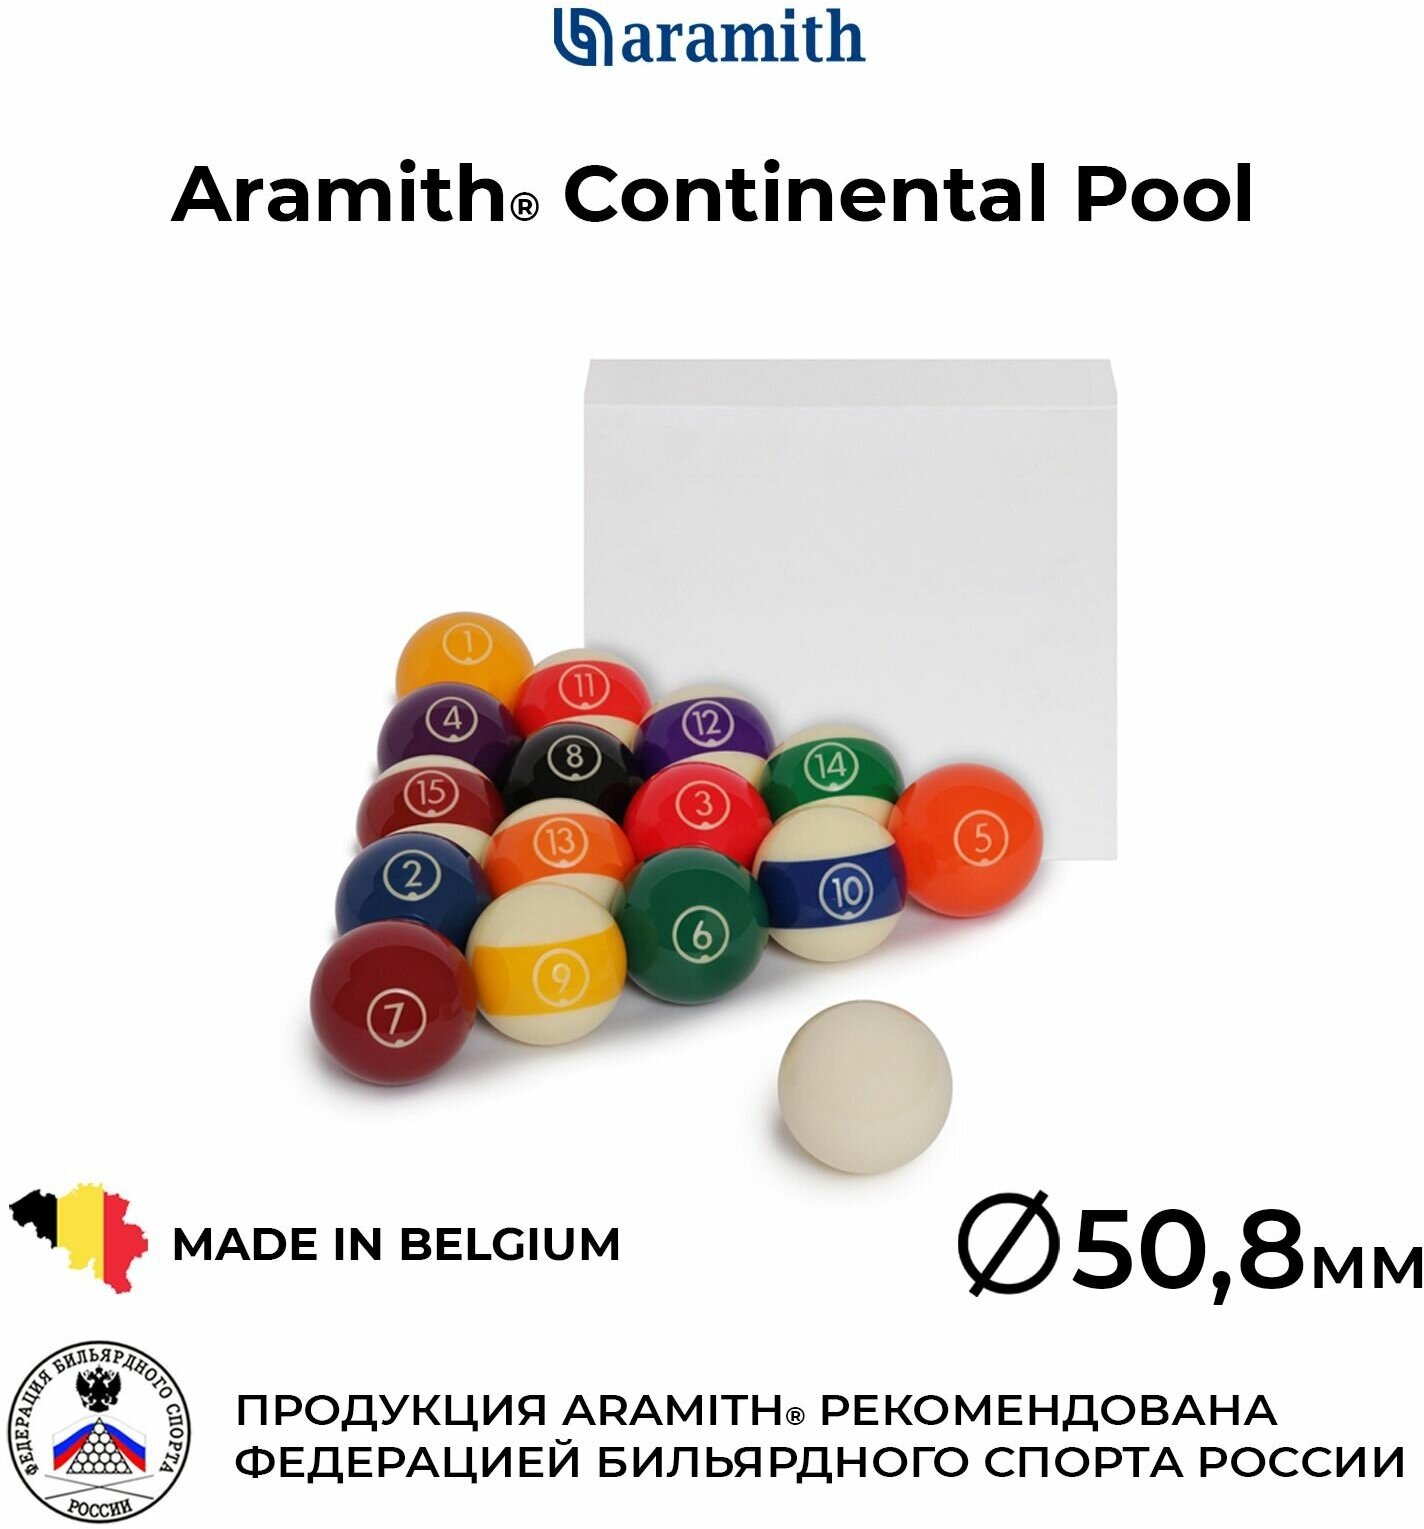 Бильярдные шары 50,8 мм Арамит Континенталь для игры в пул / Aramith Continental Pool 50,8 мм белый биток 16 шт.